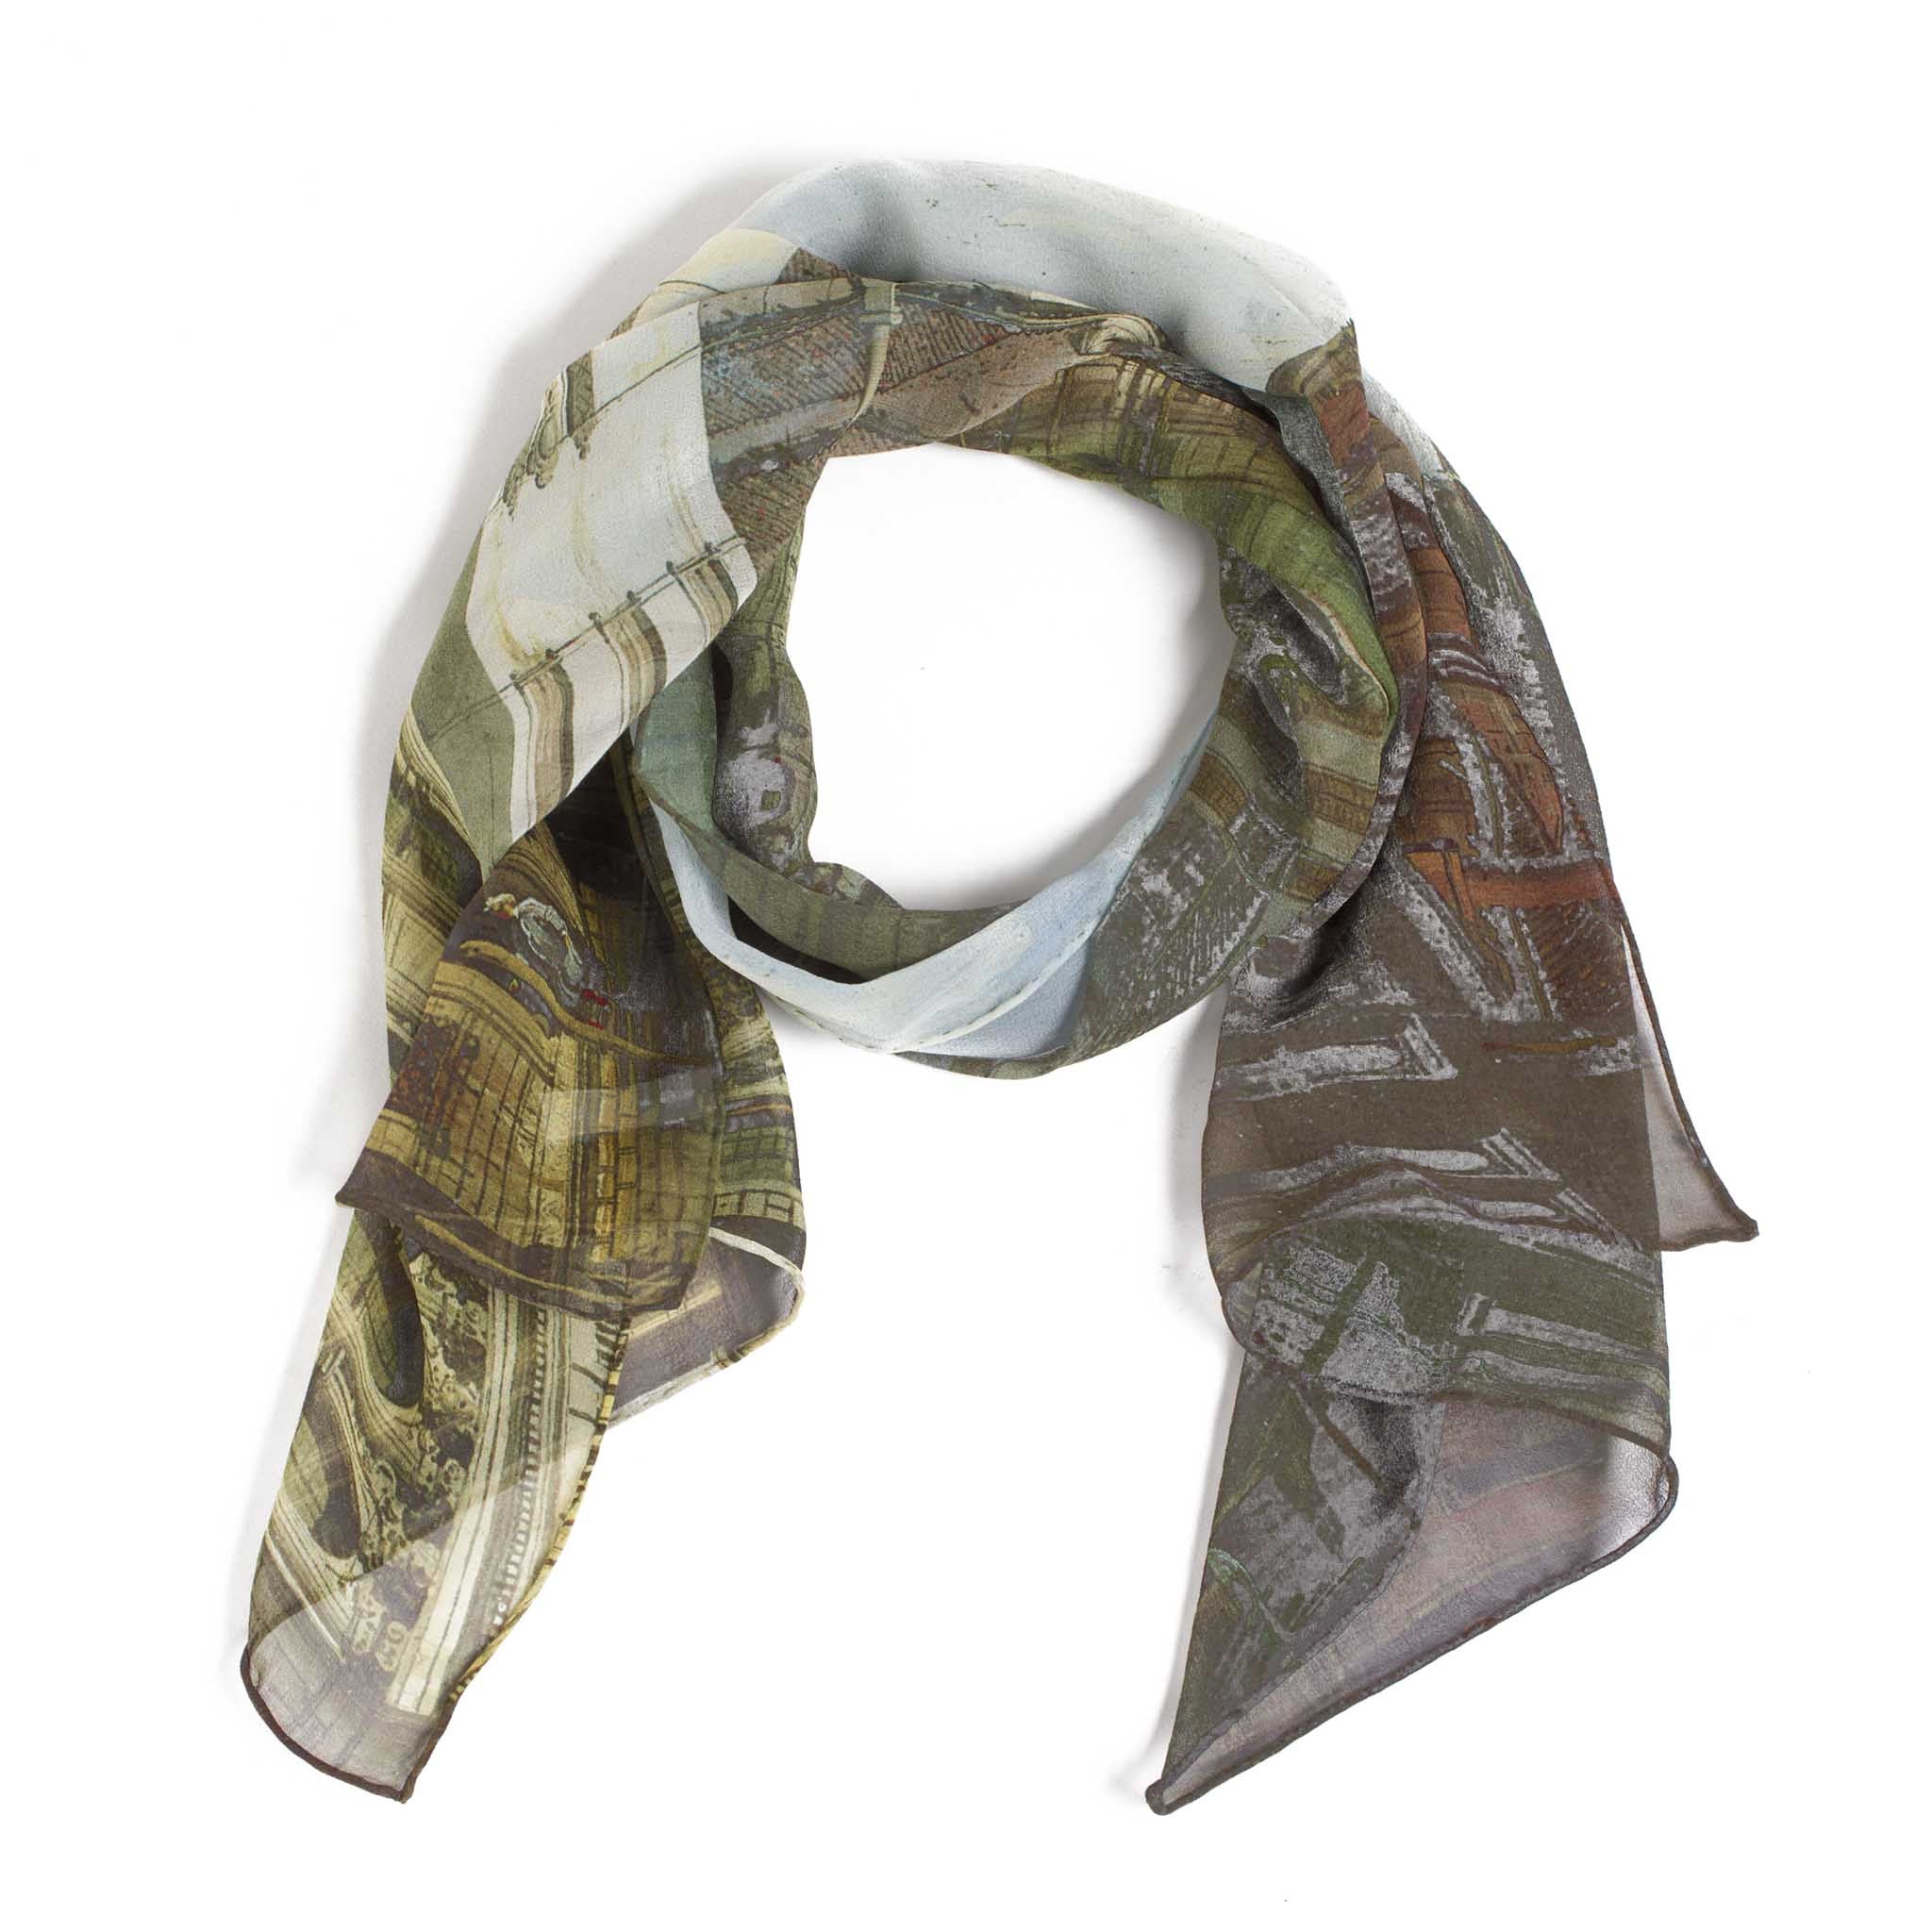 Camo / camouflage / scarf / Louis Vuitton